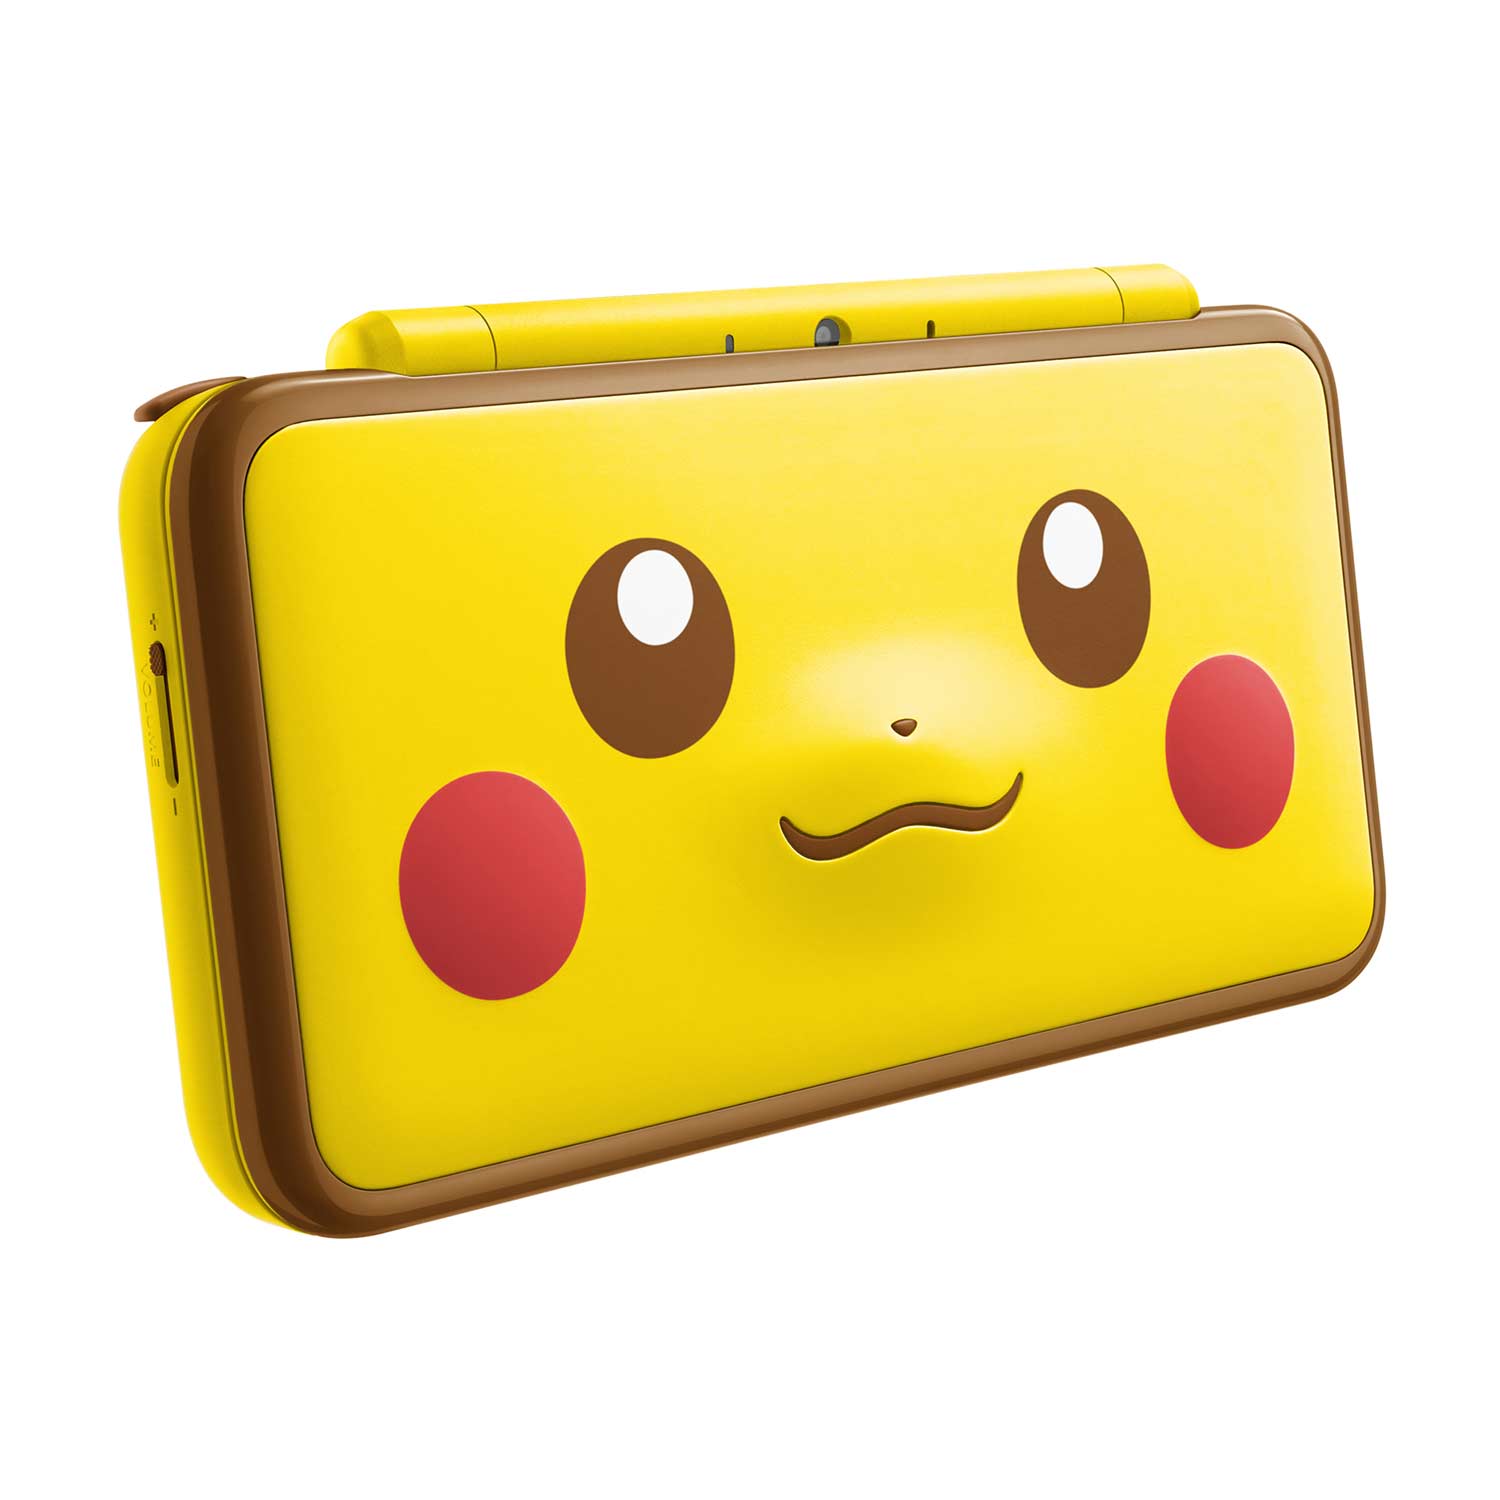 New Nintendo 2ds Xl Pikachu Edition